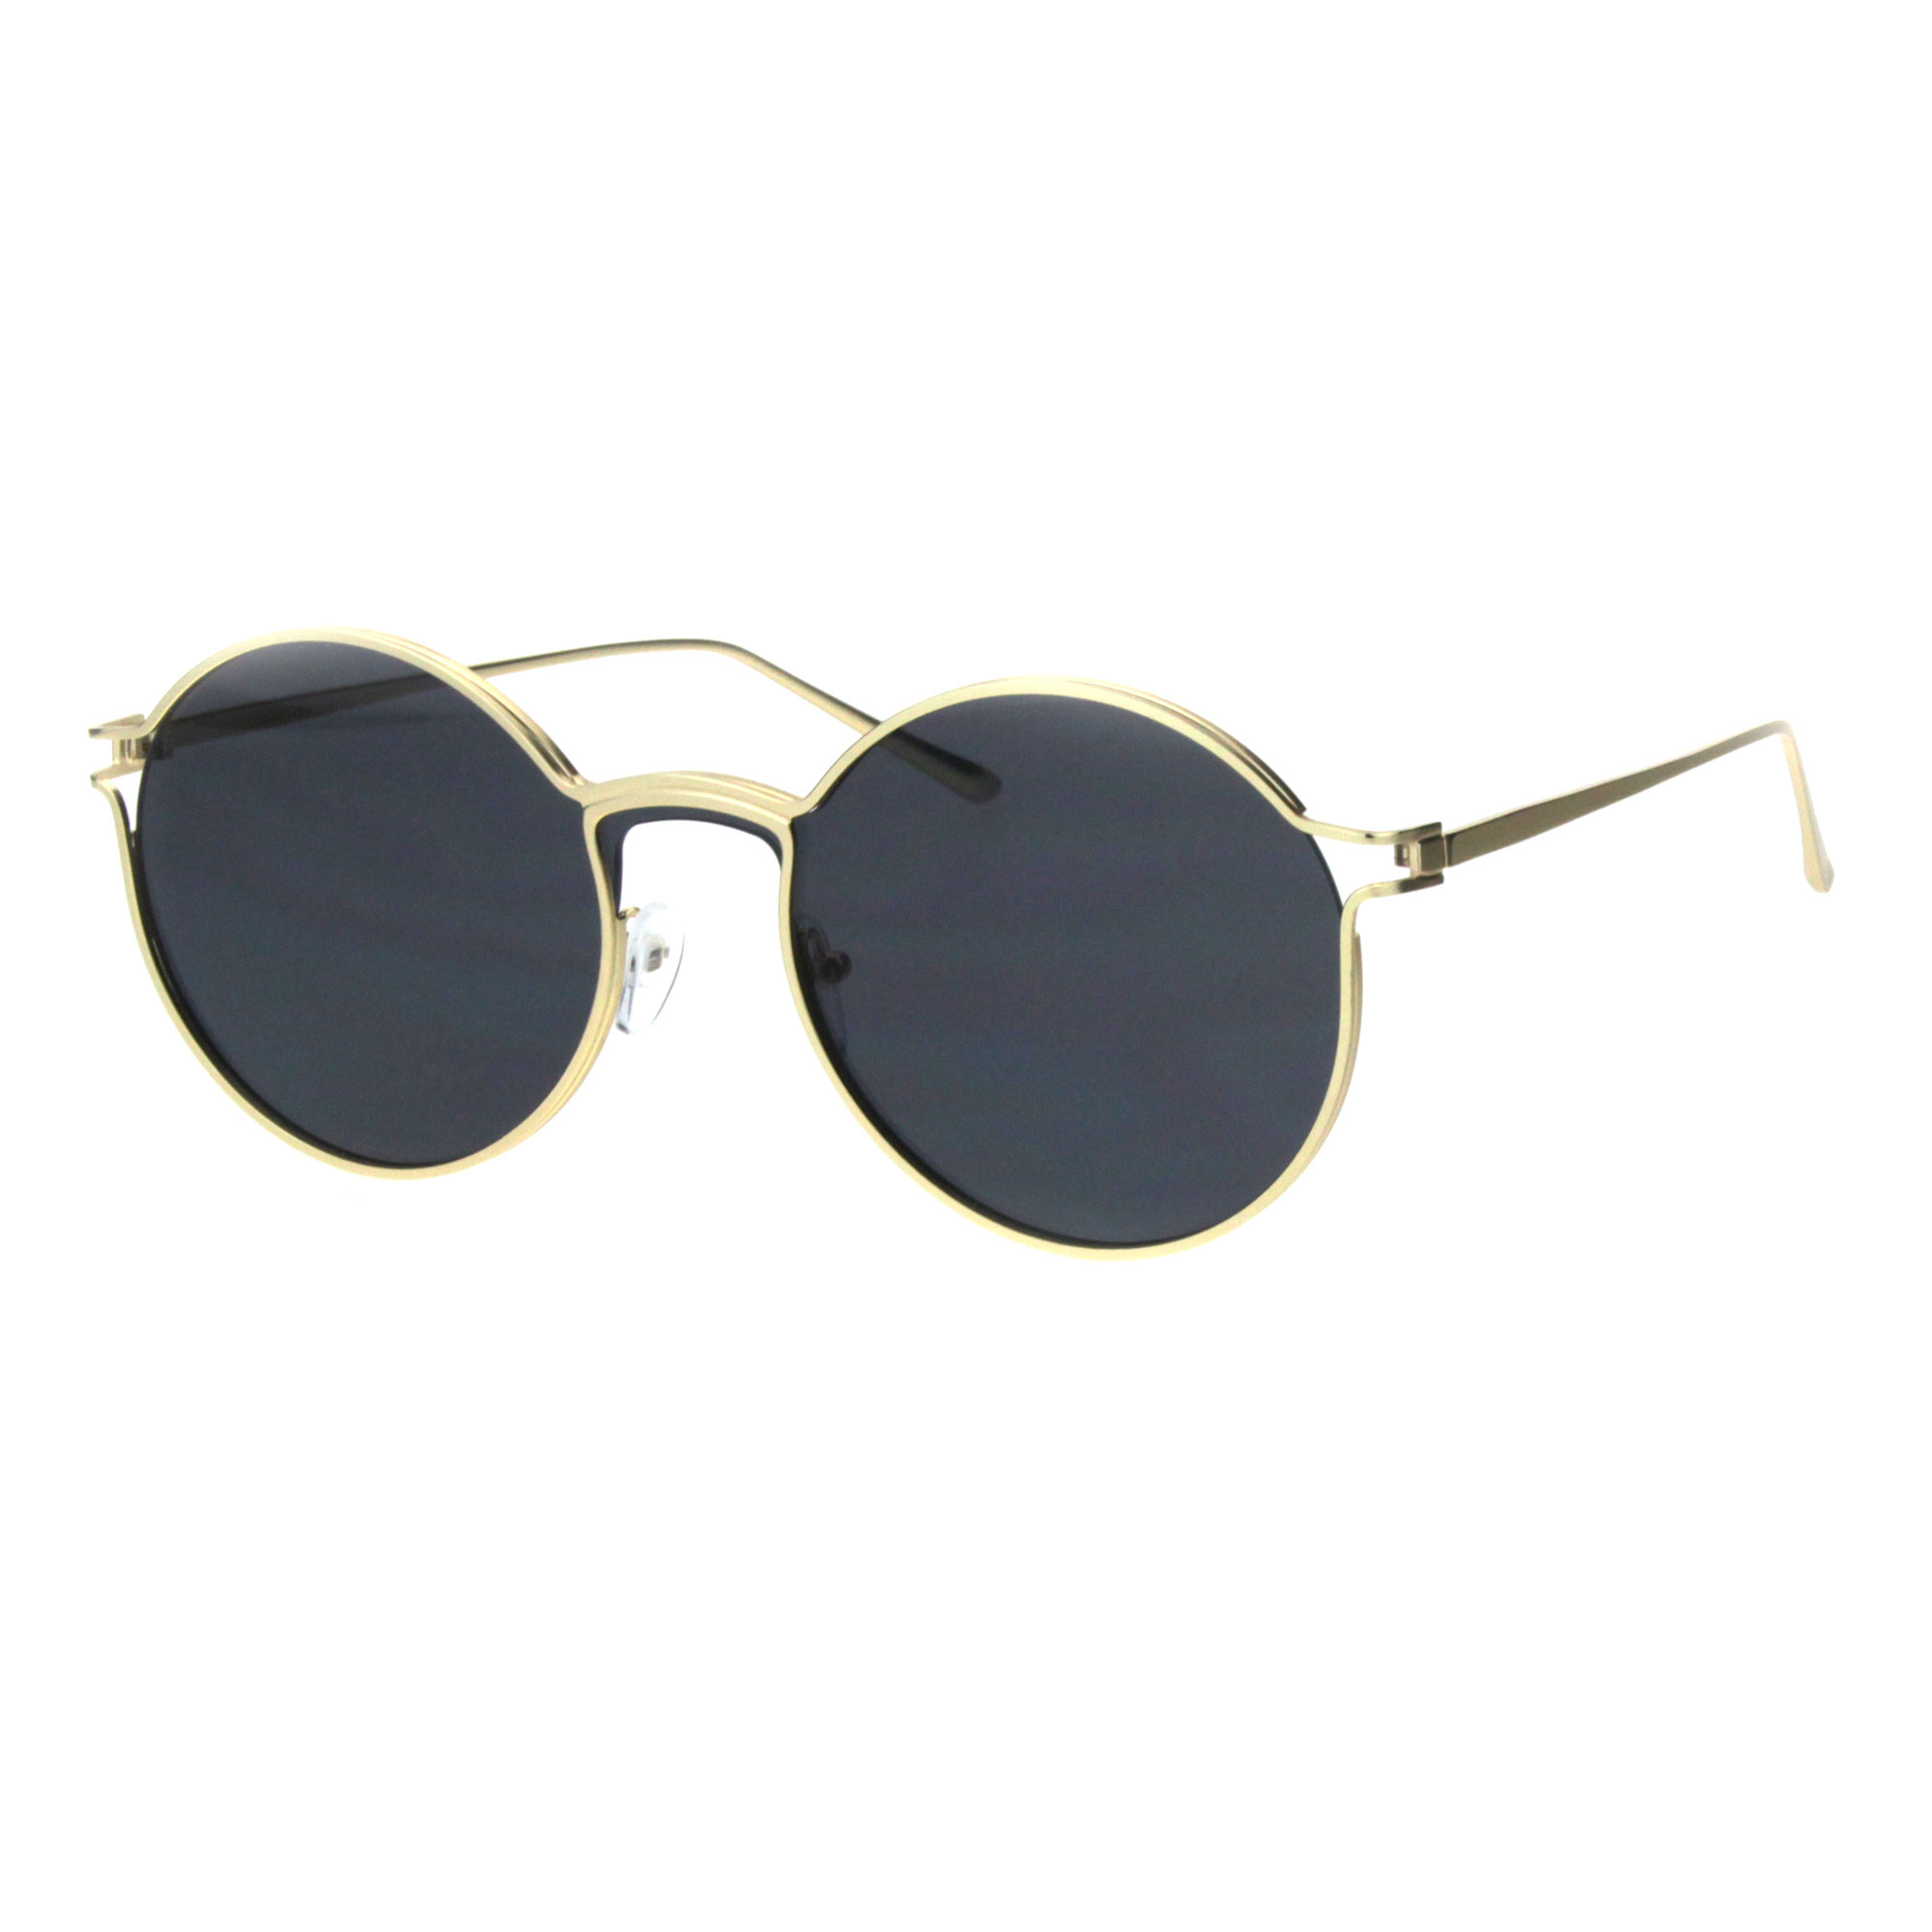 Round Retro Vintage Classic Trendy Hippie Sunglasses Gold Black - image 2 of 4